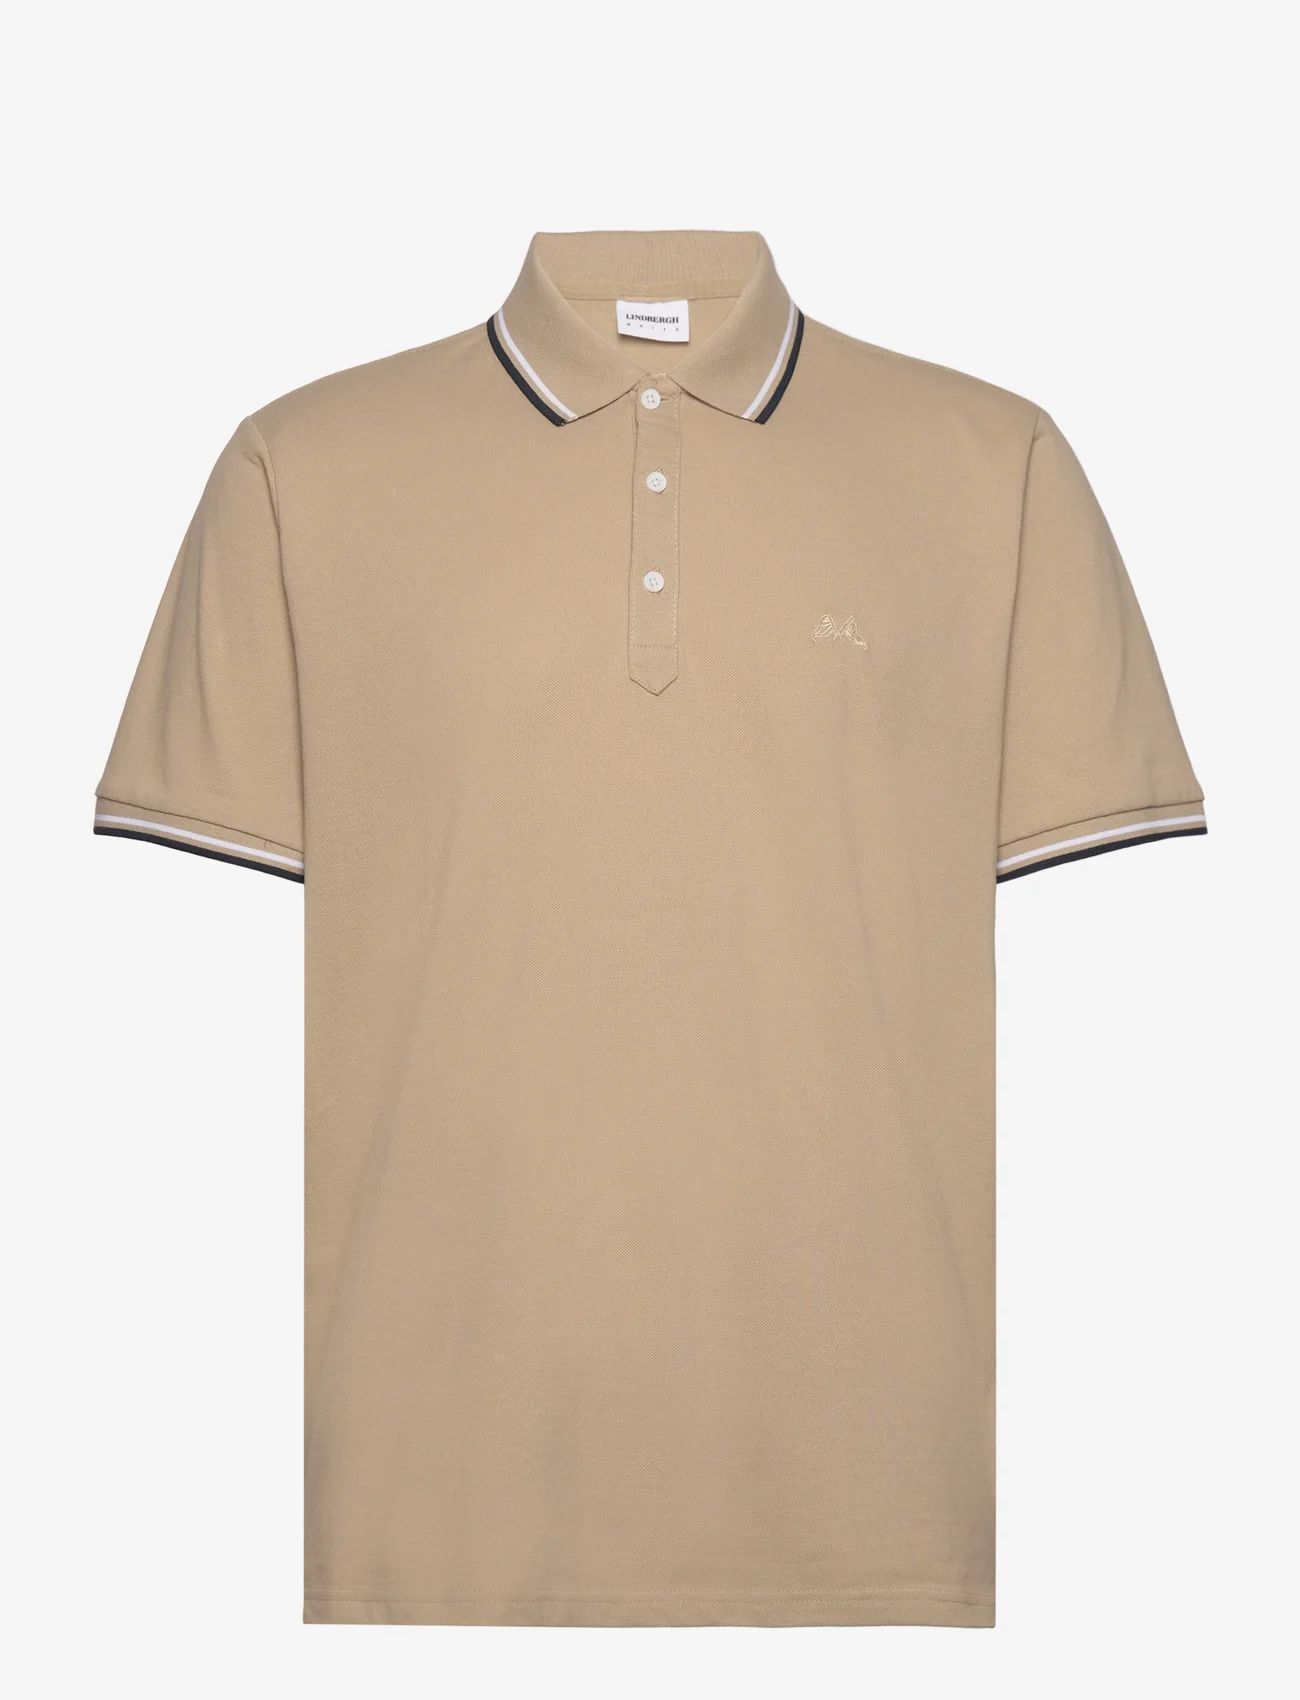 Lindbergh - Polo shirt with contrast piping - najniższe ceny - stone - 0